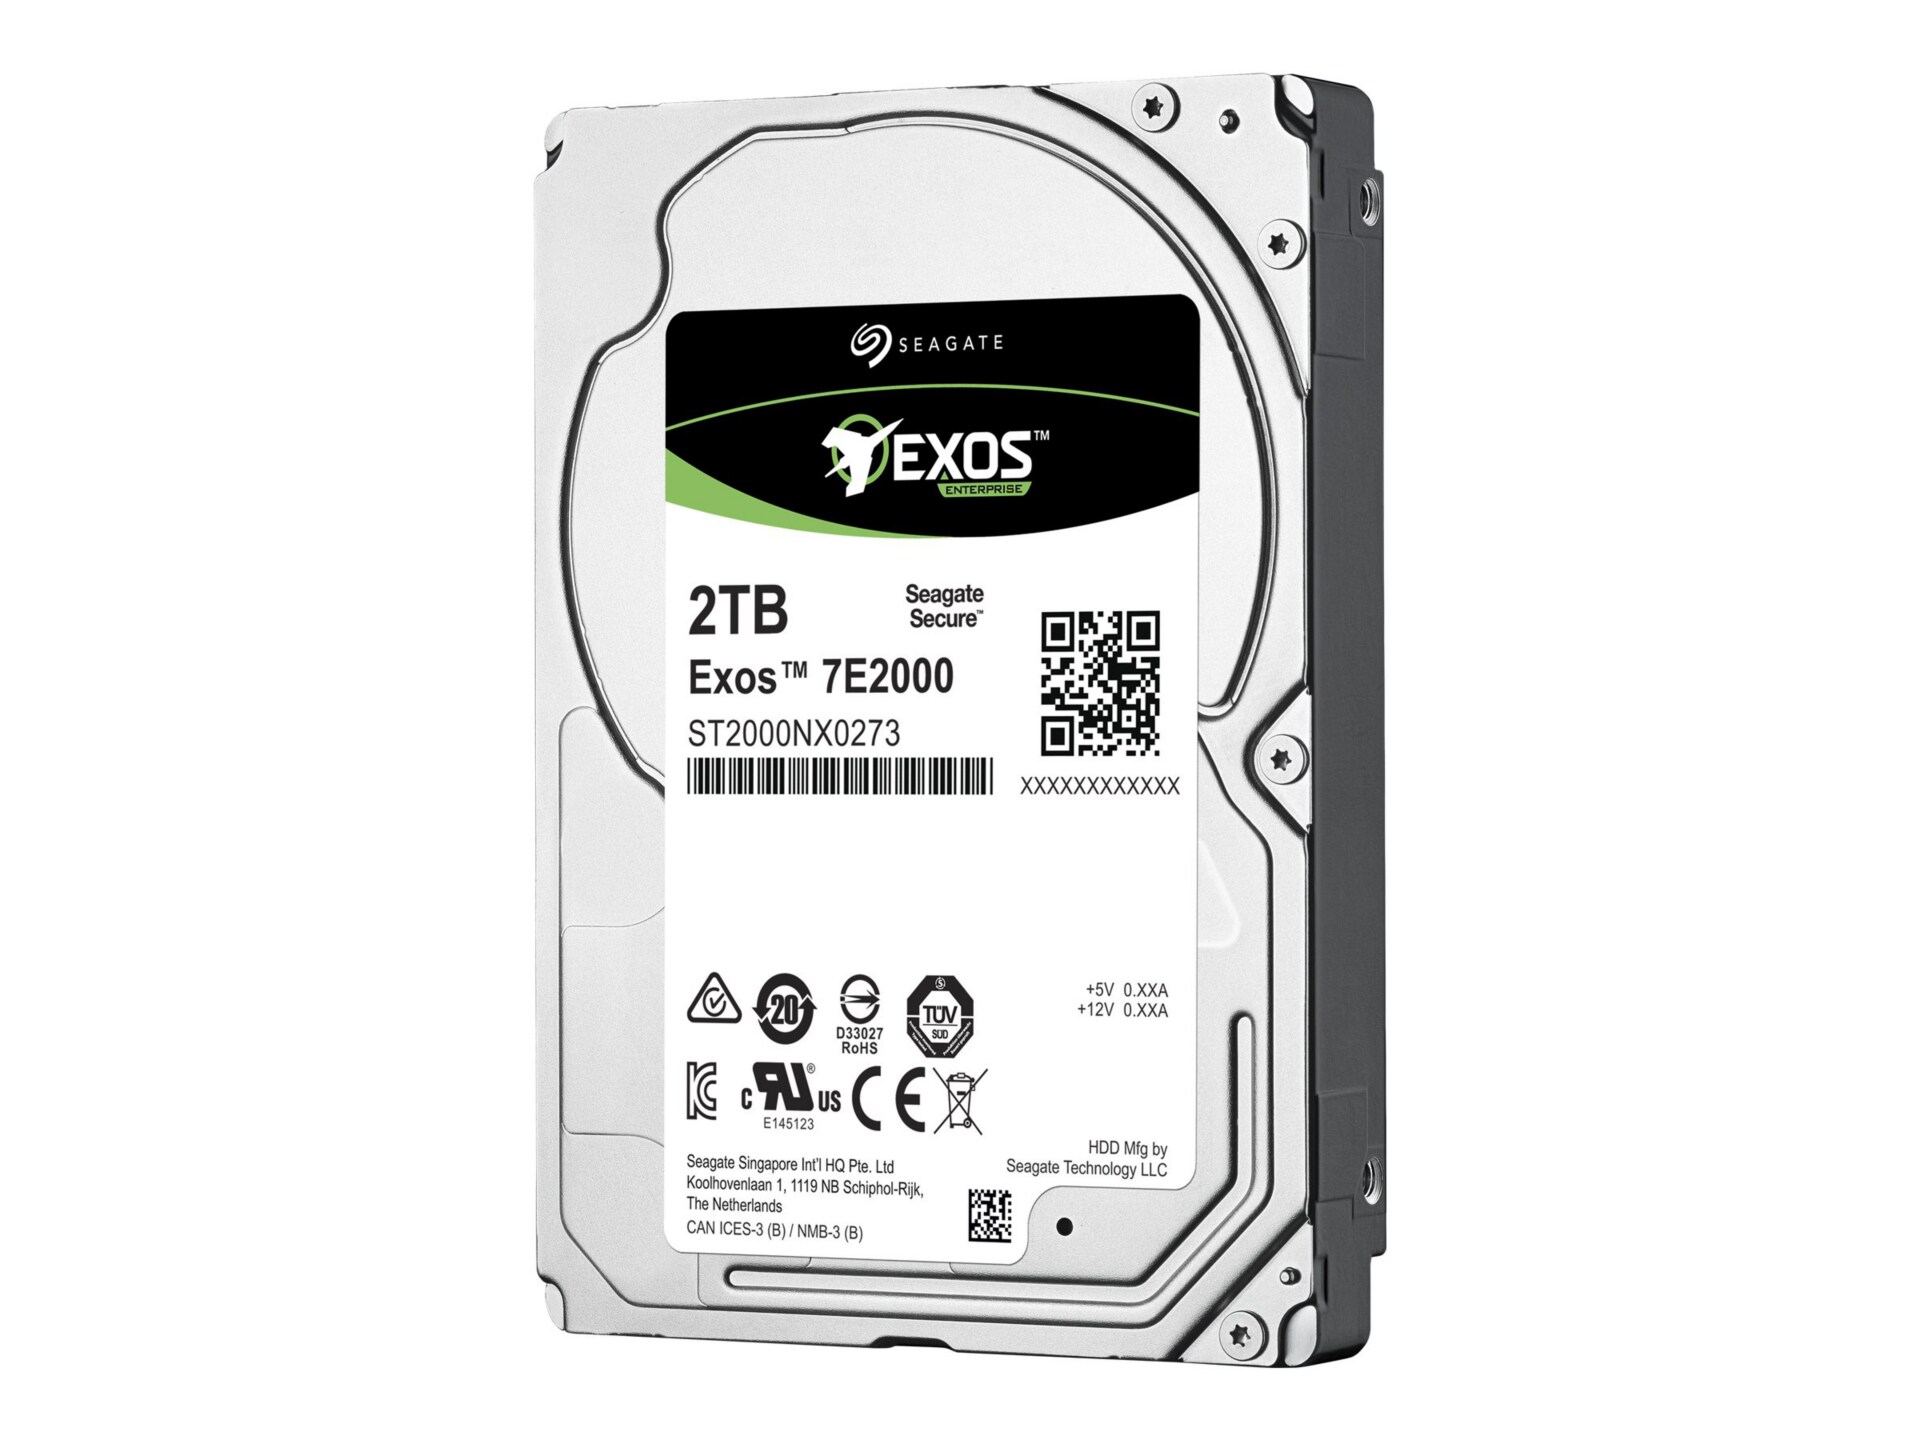 Seagate Exos 7E2000 ST2000NX0273 - hard drive - 2 TB - SAS 12Gb/s